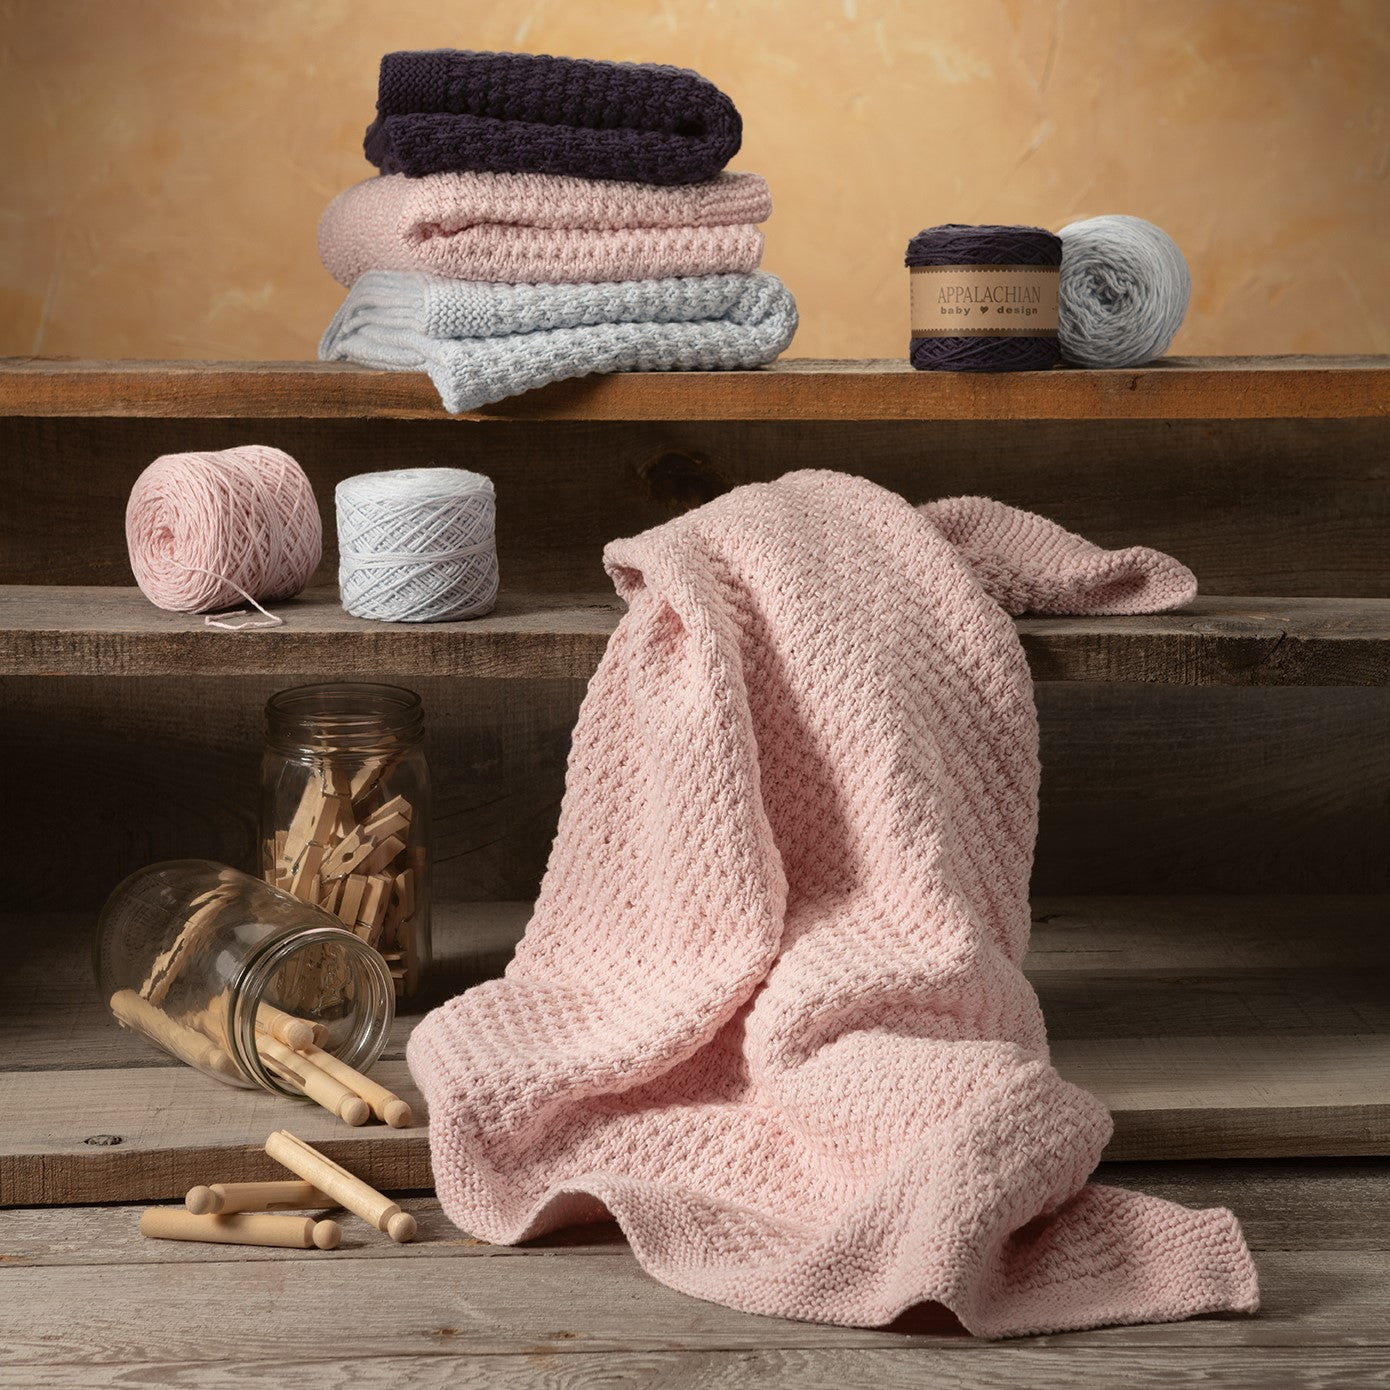 10 Chunky Knit Blanket Kits - Knitting News